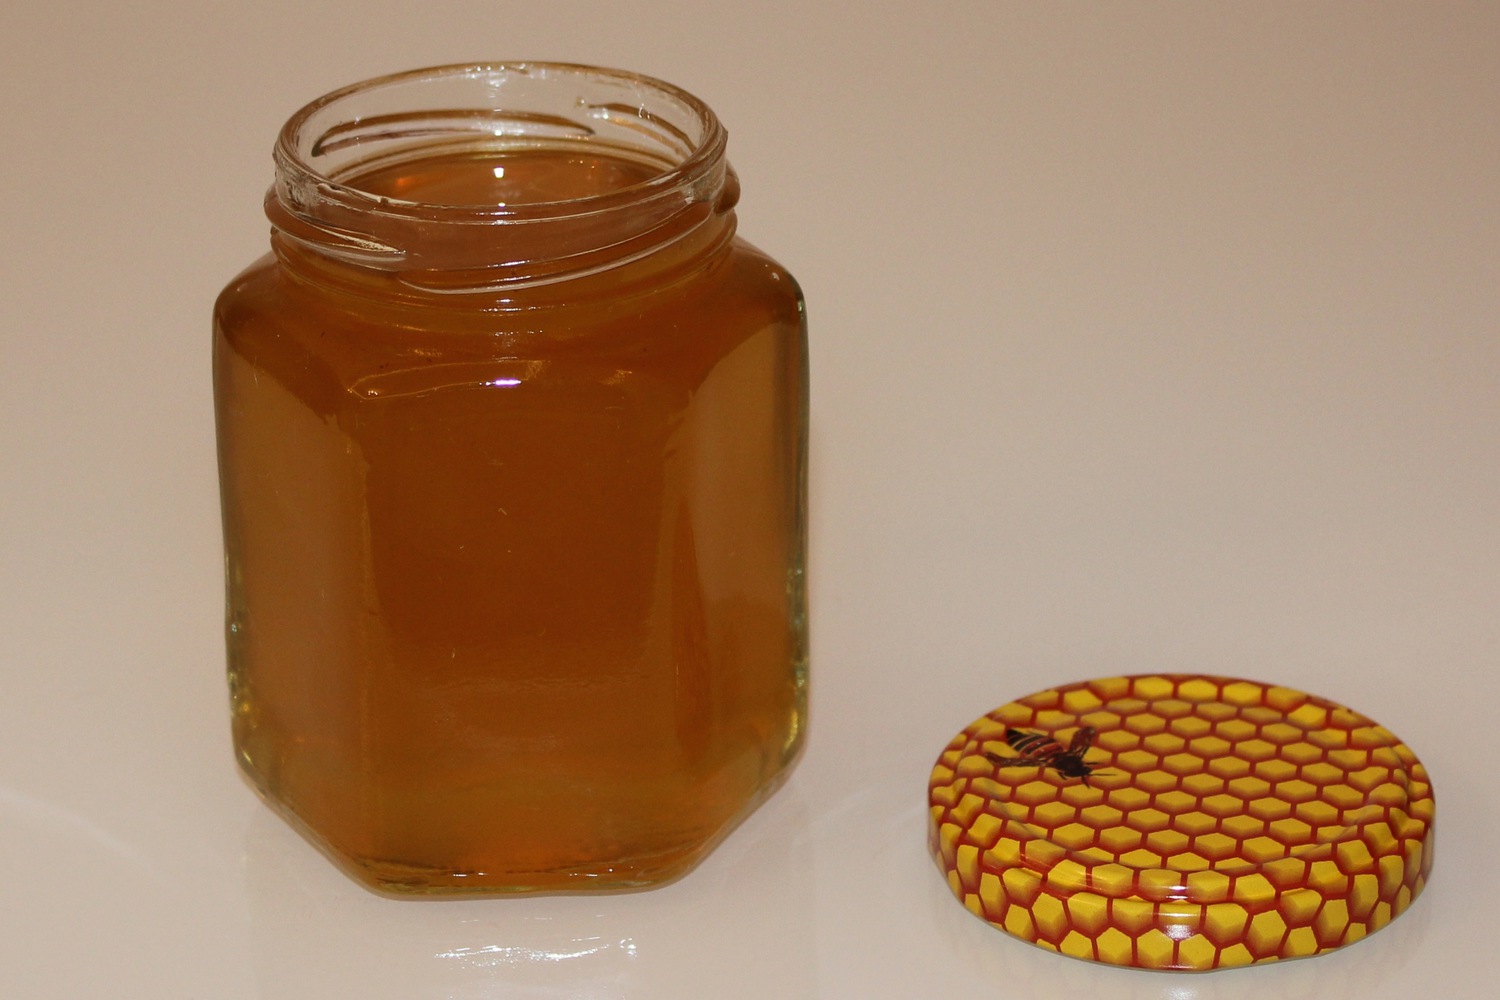 Мед кориандр. Мёд кориандровый. Кориандровый мед цвет. Мед разнотравье с кориандром.